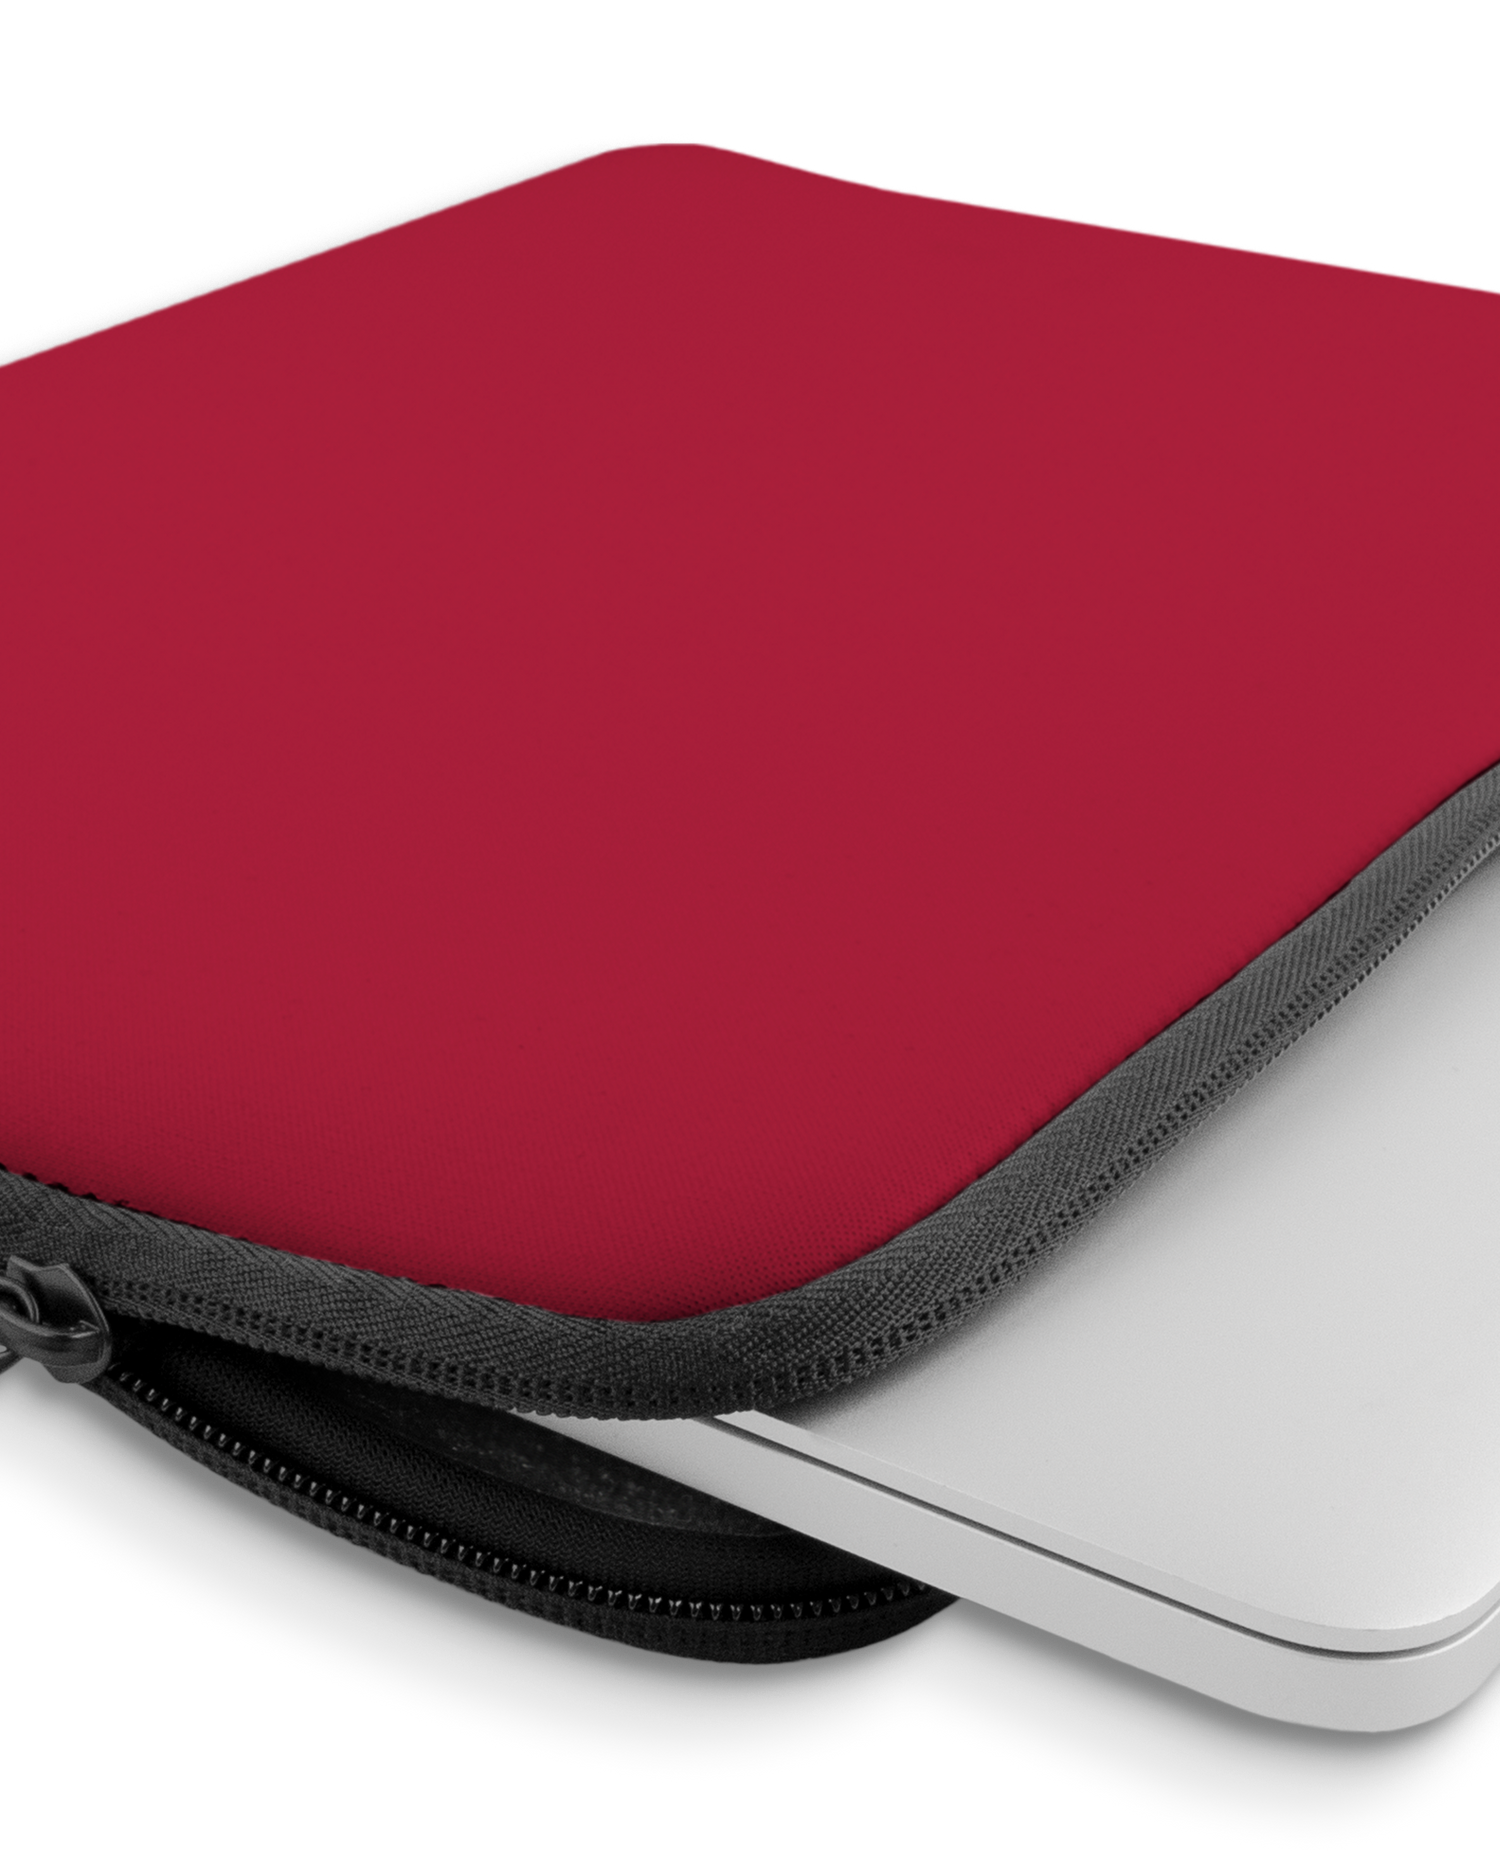 RED Laptophülle 13-14 Zoll mit Gerät im Inneren